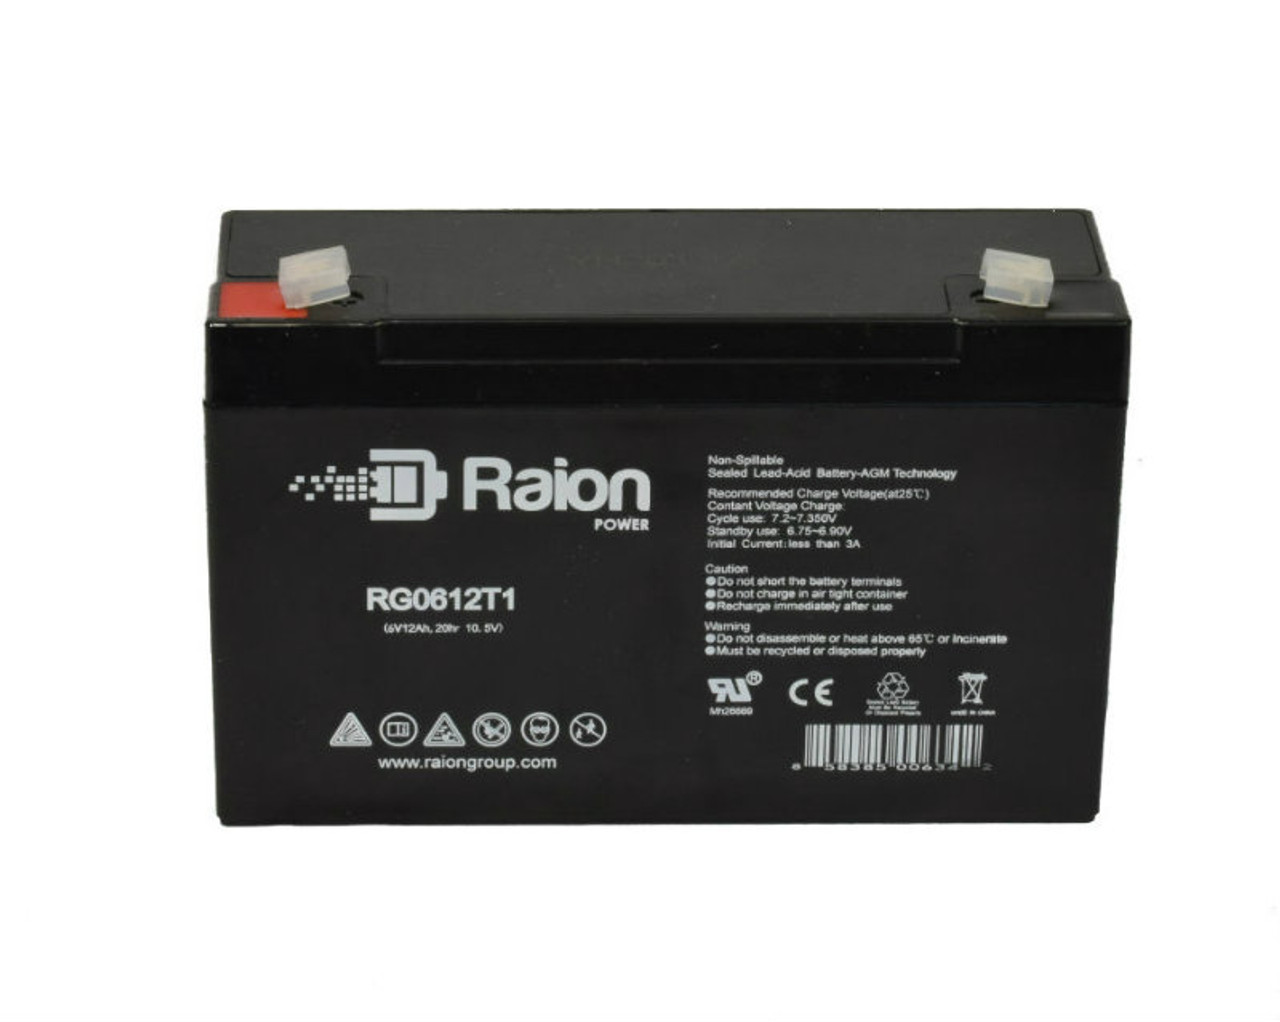 Raion Power RG06120T1 SLA Battery for Air Shields Medical TI-1303 Transport Incubator